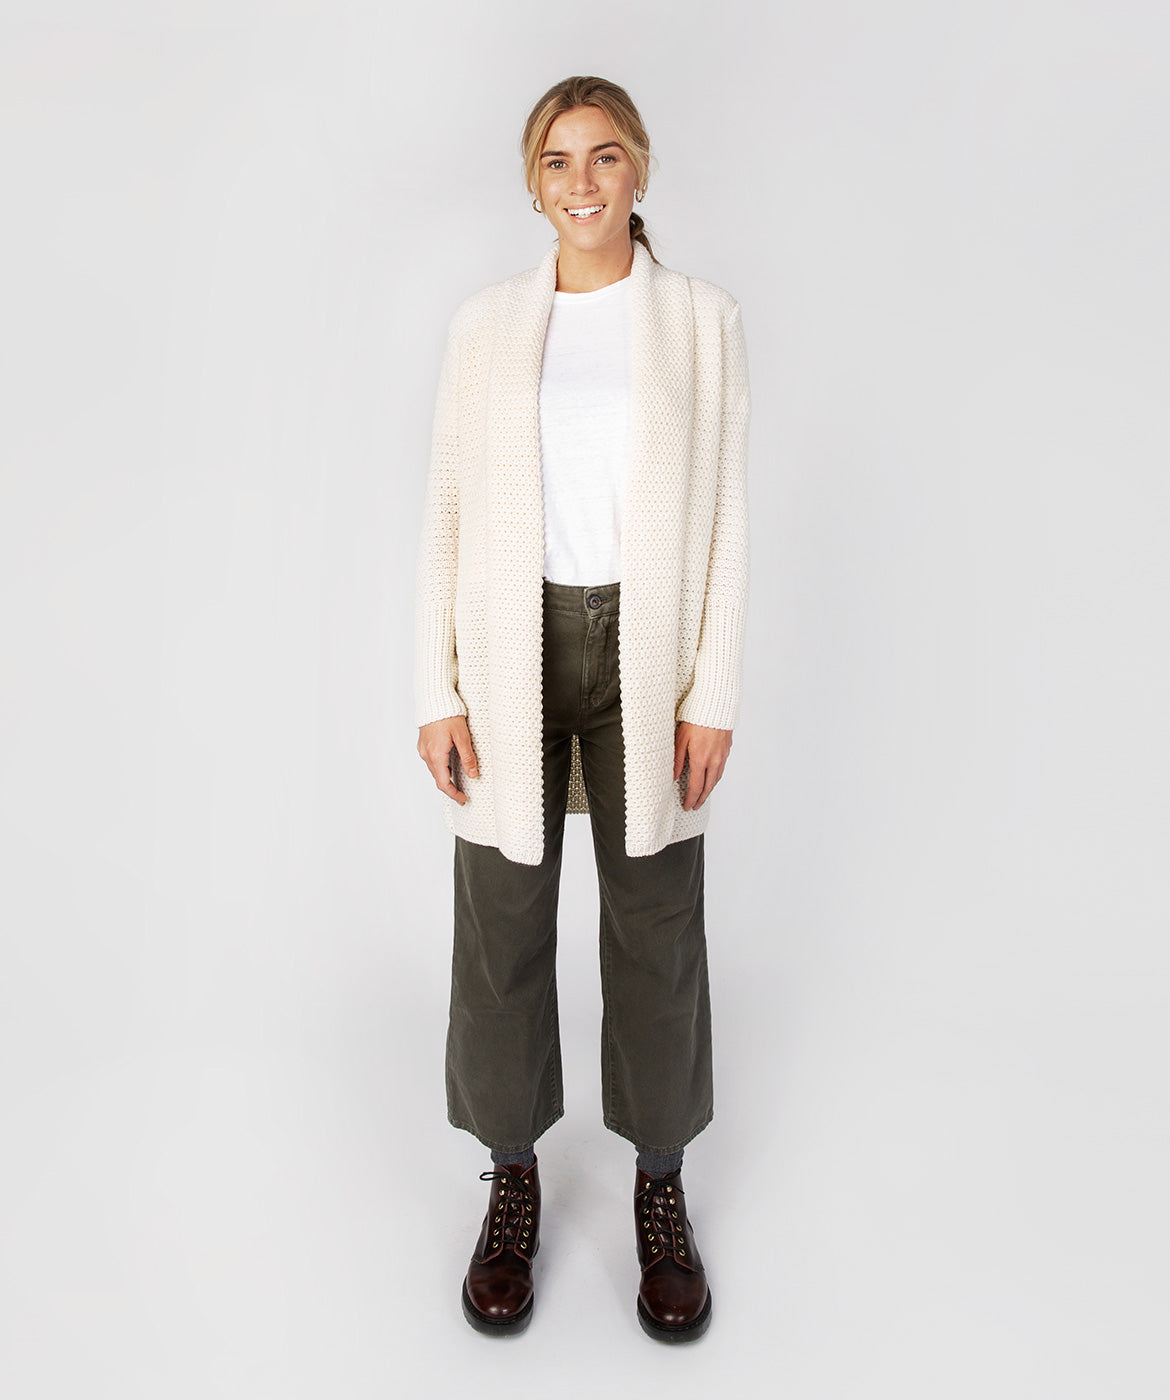 Women's Merino Wool Textured Long Cardigan